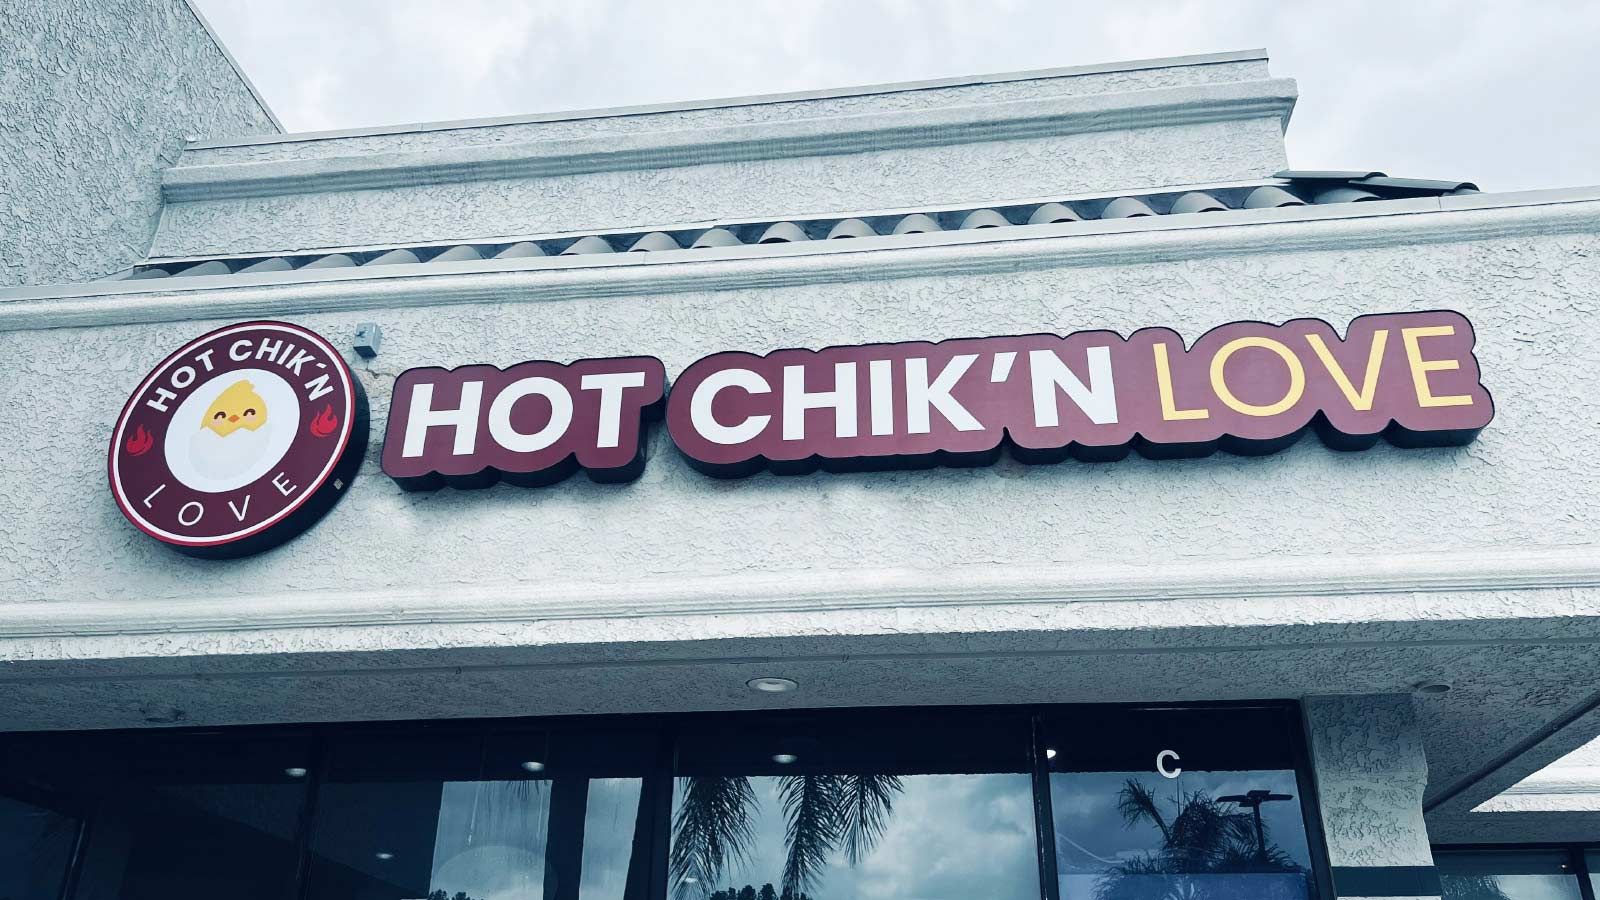 Hot chikn love restaurant sign